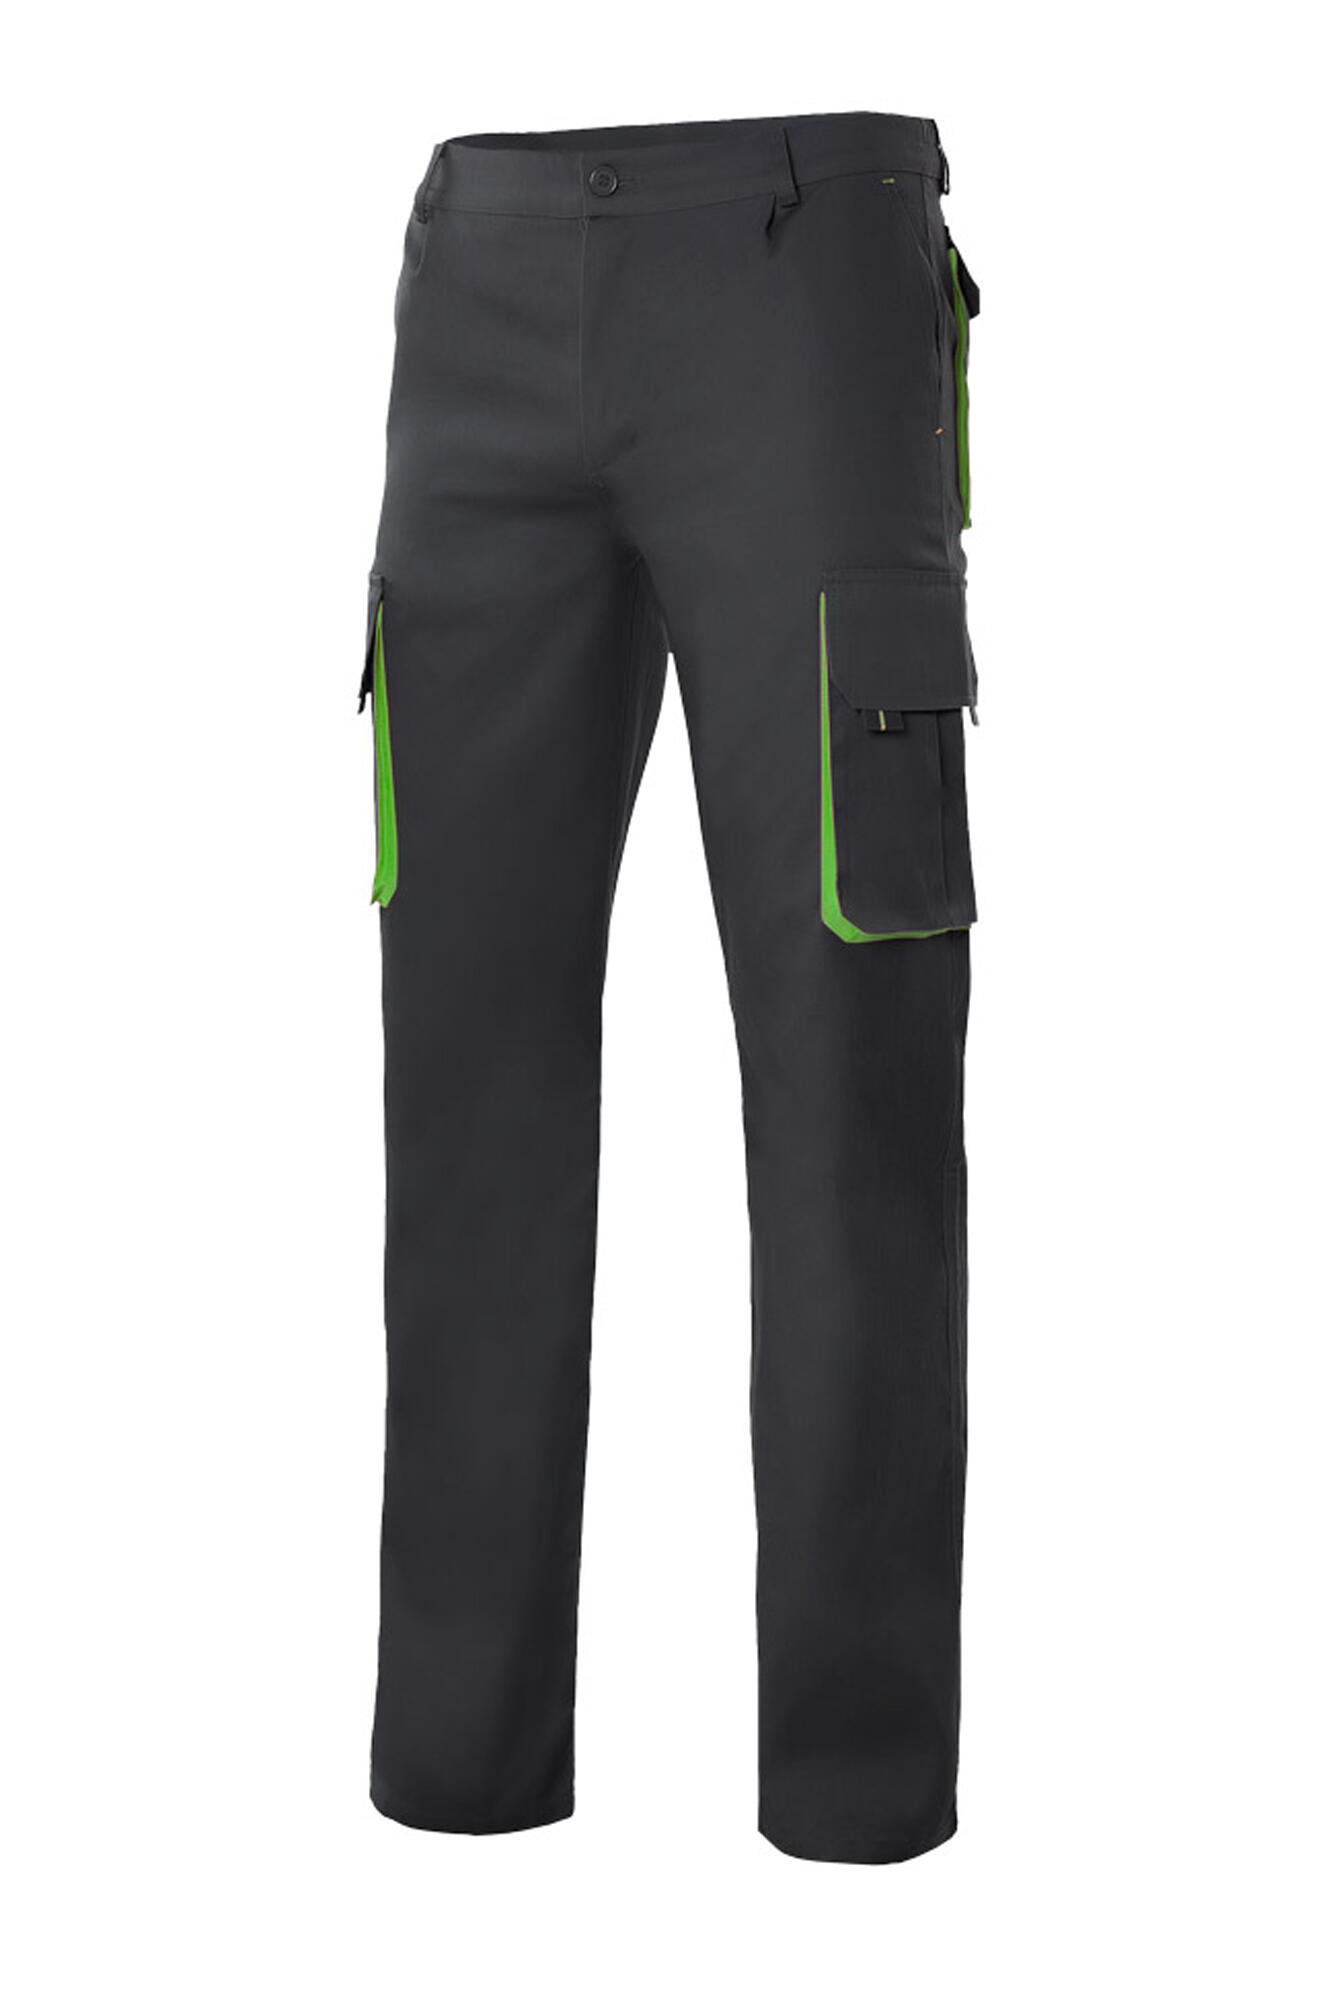 Pantalon de trabajo bicolor multibol negr/verdelima t60